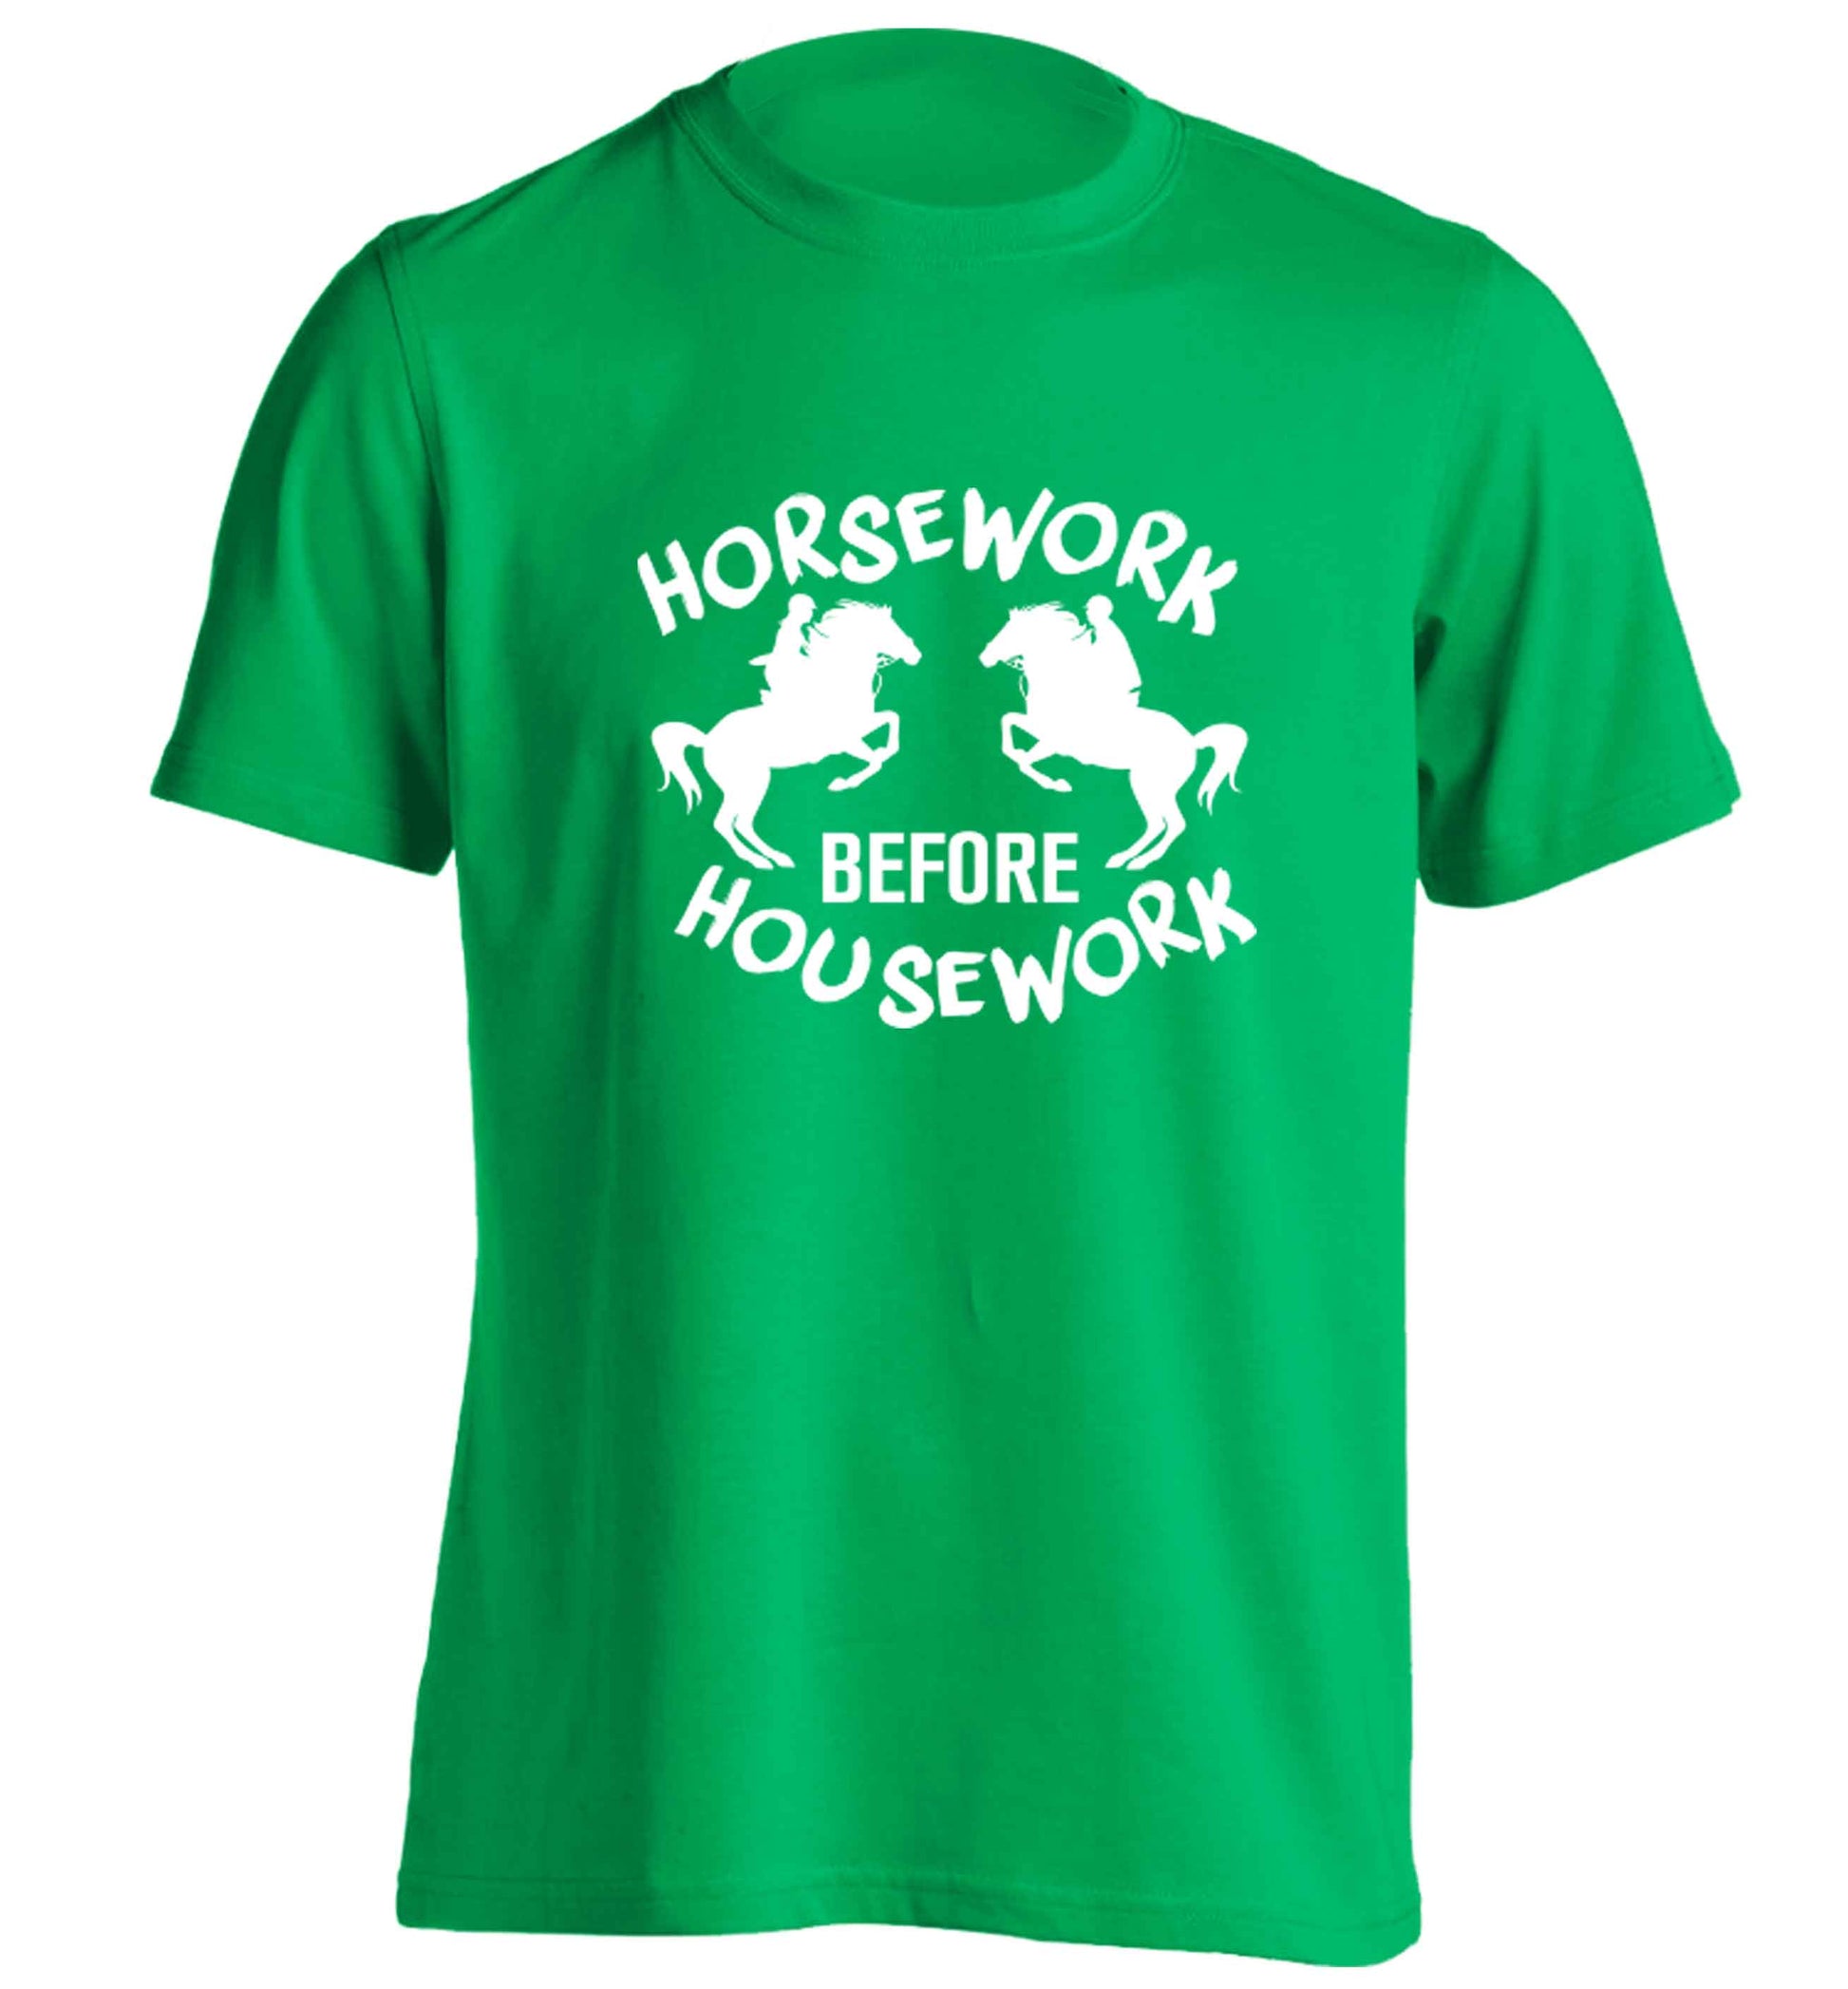 Horsework before housework adults unisex green Tshirt 2XL